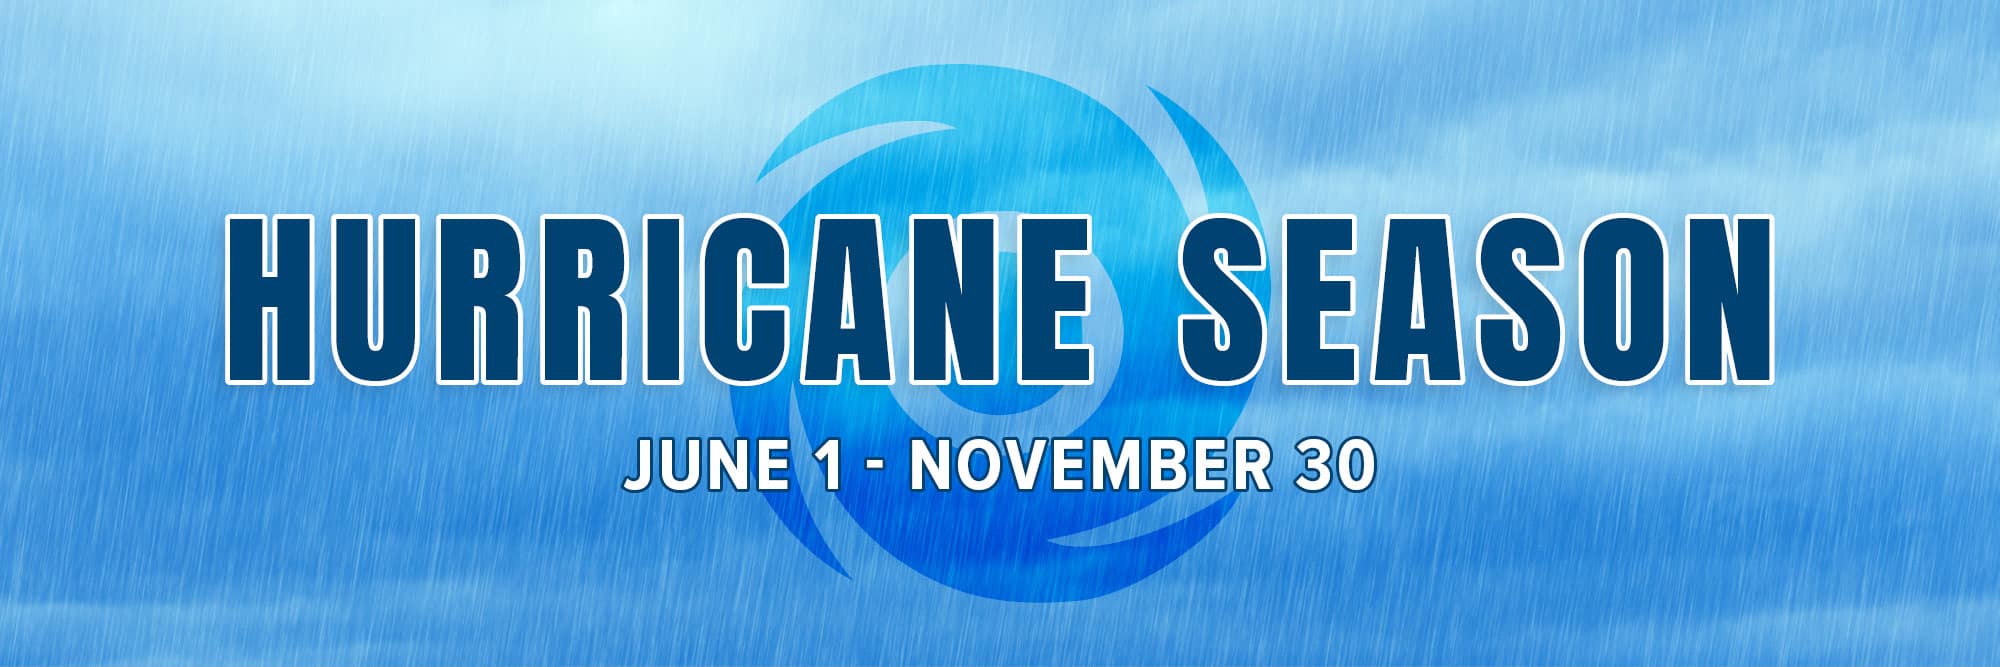 Hurricane Season | June 1 - November 30